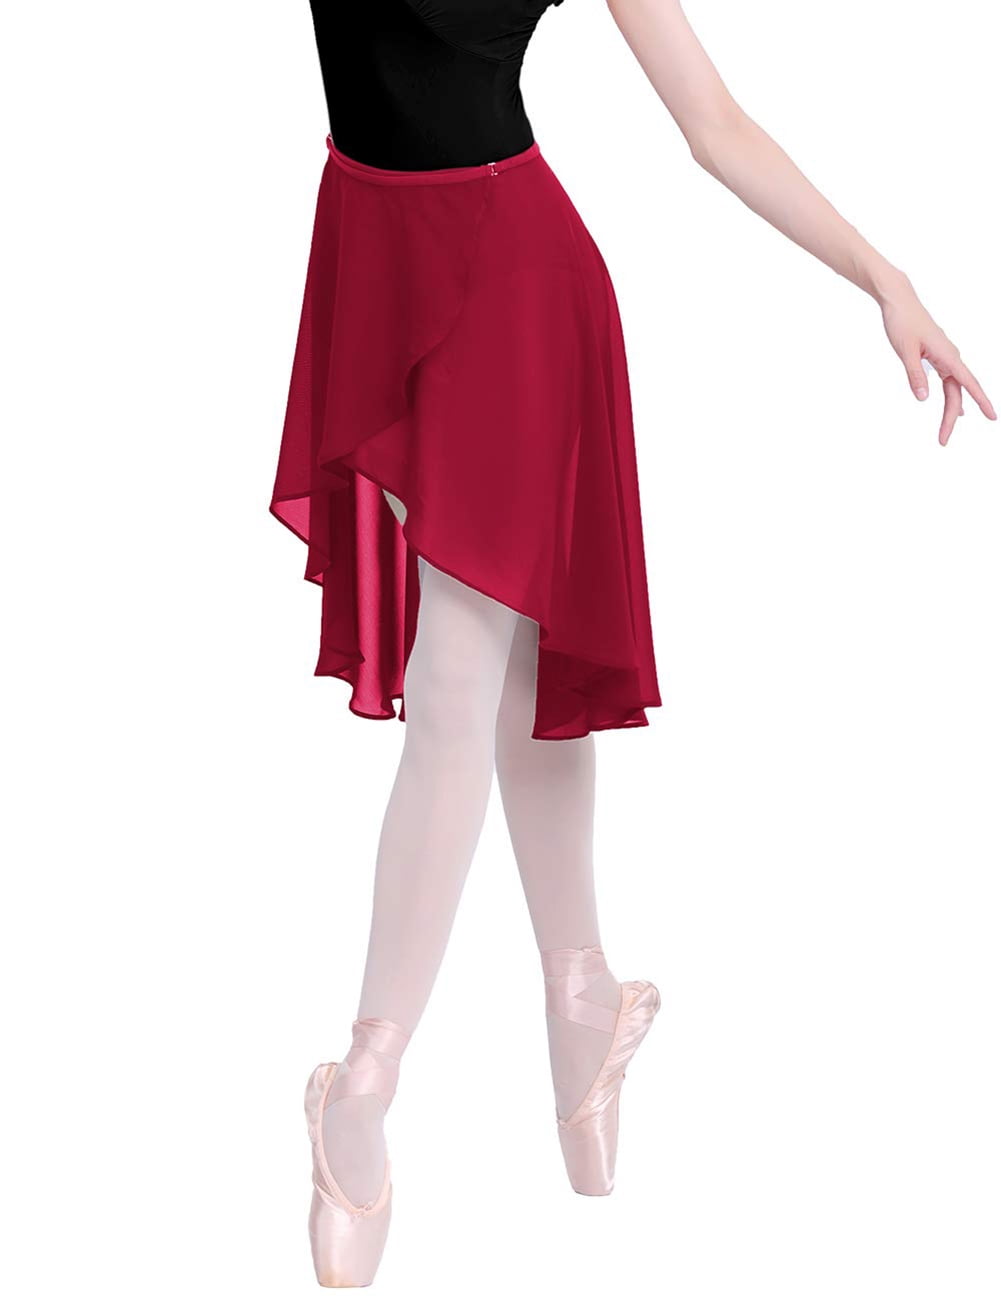 Alvivi Kids Girls Basic Classic Chiffon Ballet Dance Wrap Skirts with Tie Waist Size 4-16